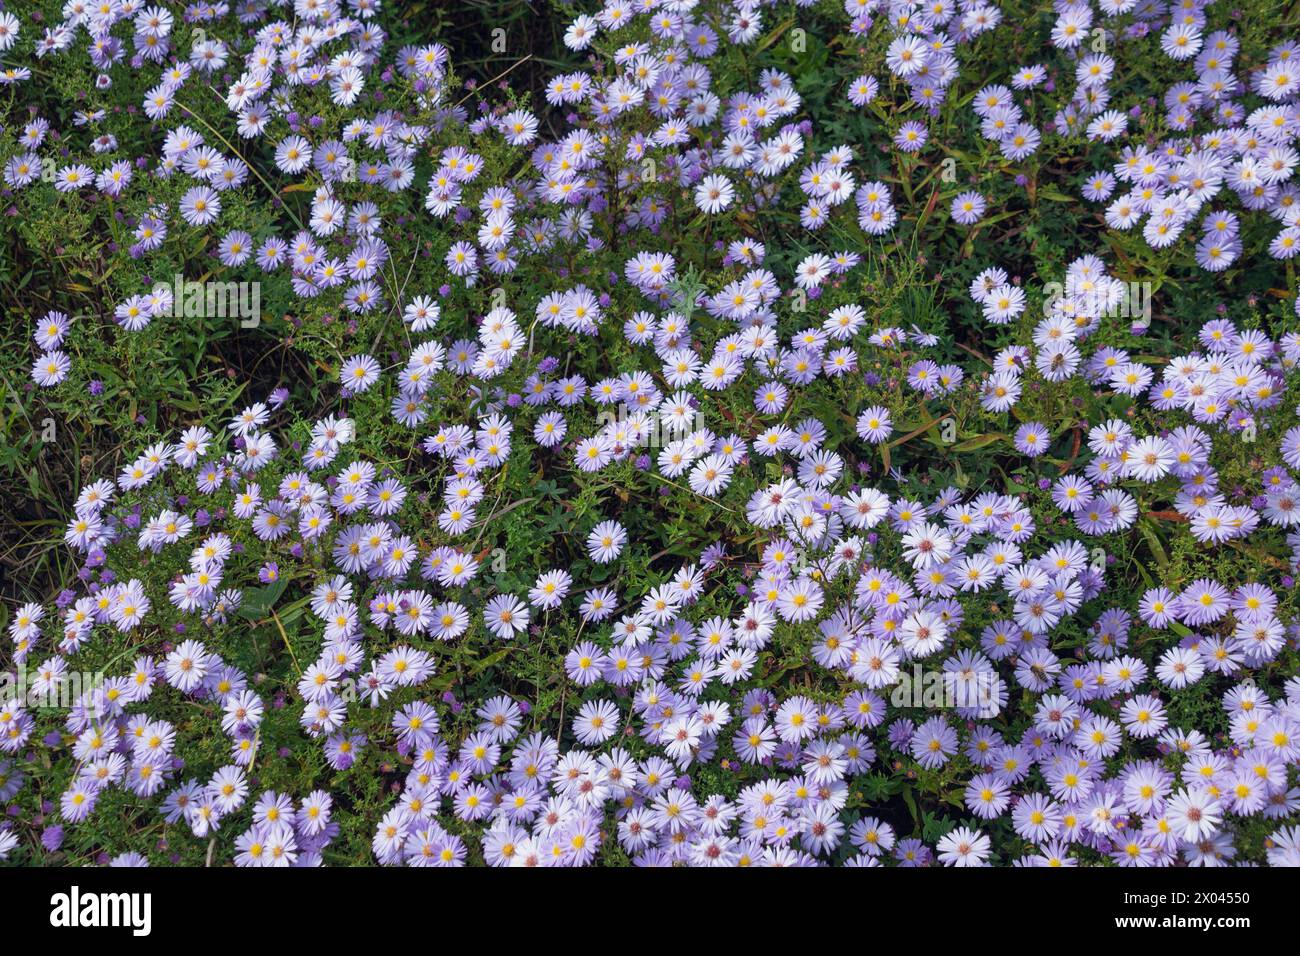 Glade of flowers Symphyotrichum novi-belgii, New York aster. Floral background. Summer flowering in the garden. Stock Photo